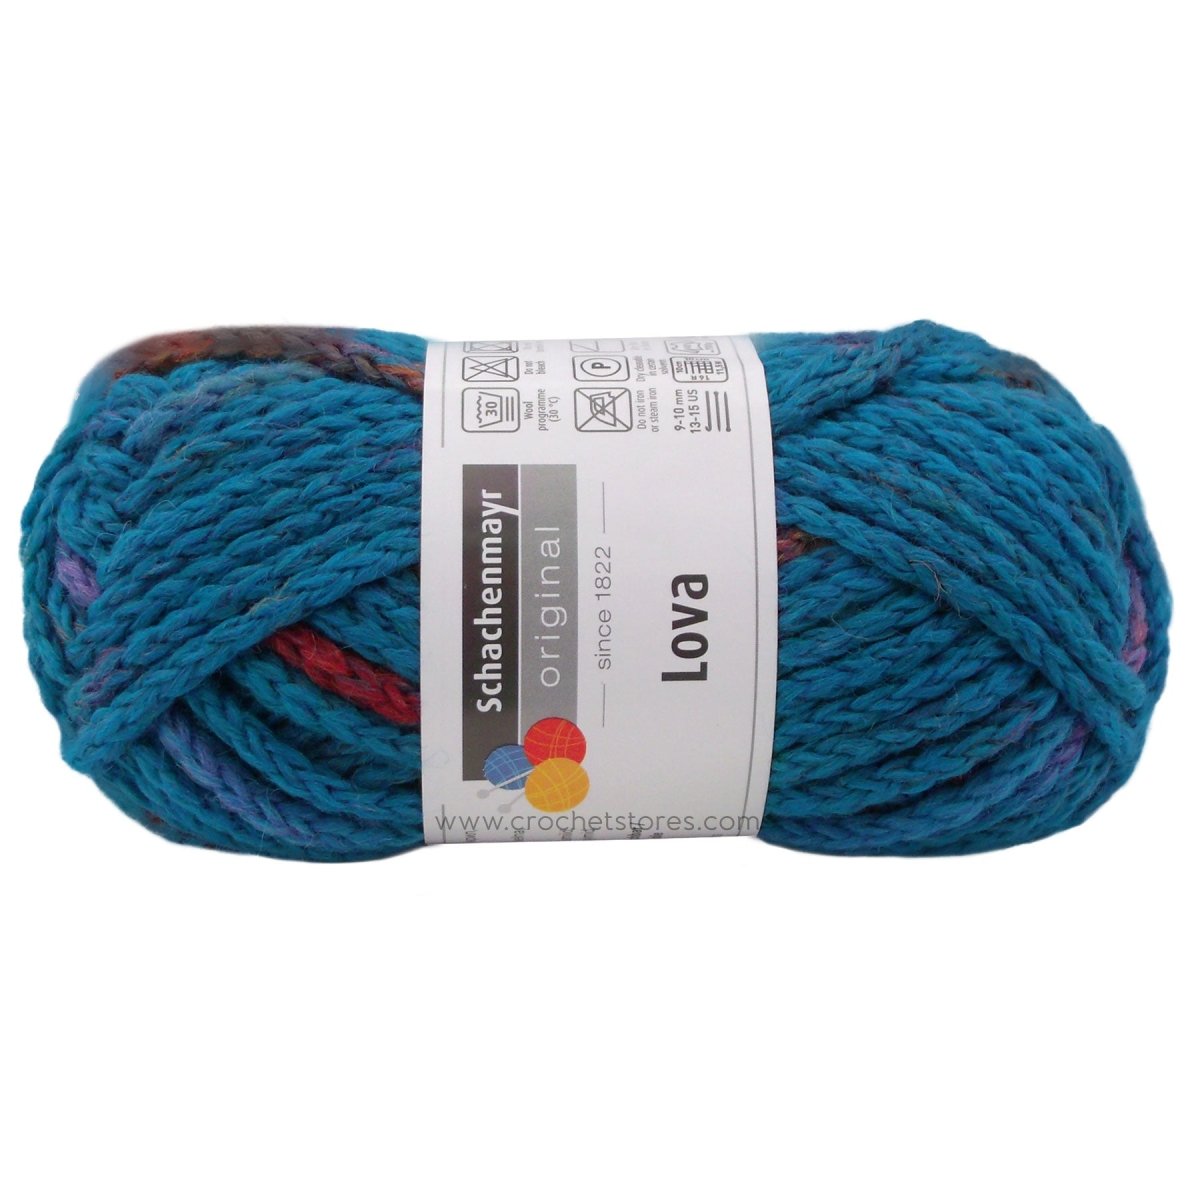 LOVA - Crochetstores9807543-924053859047036